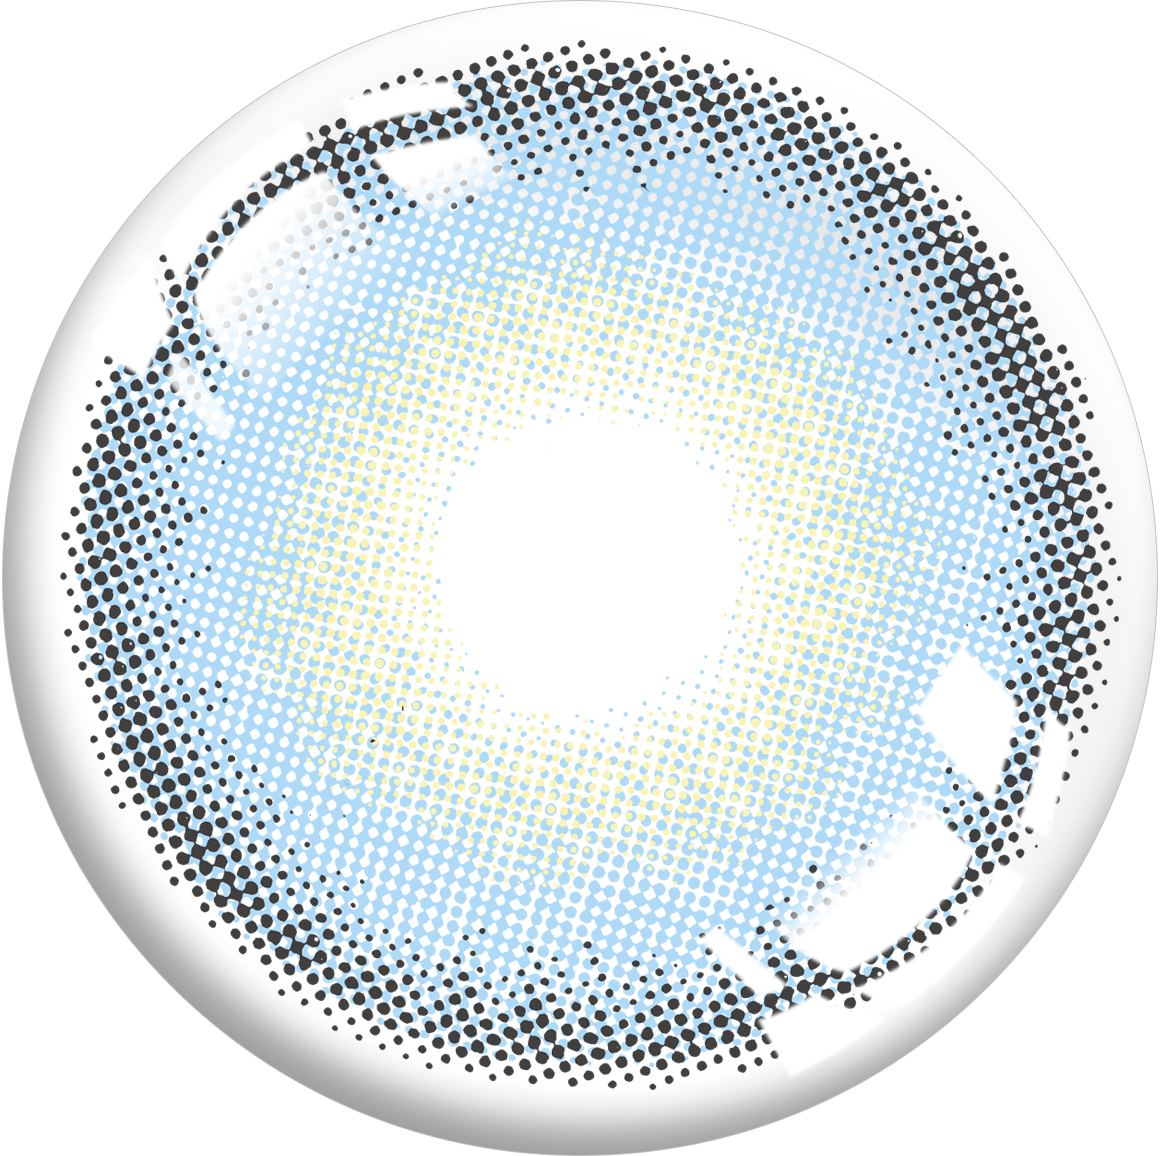 Беспецептурные контактные линзы KSSEYE 0 - кратное зеркало 14,2 мм